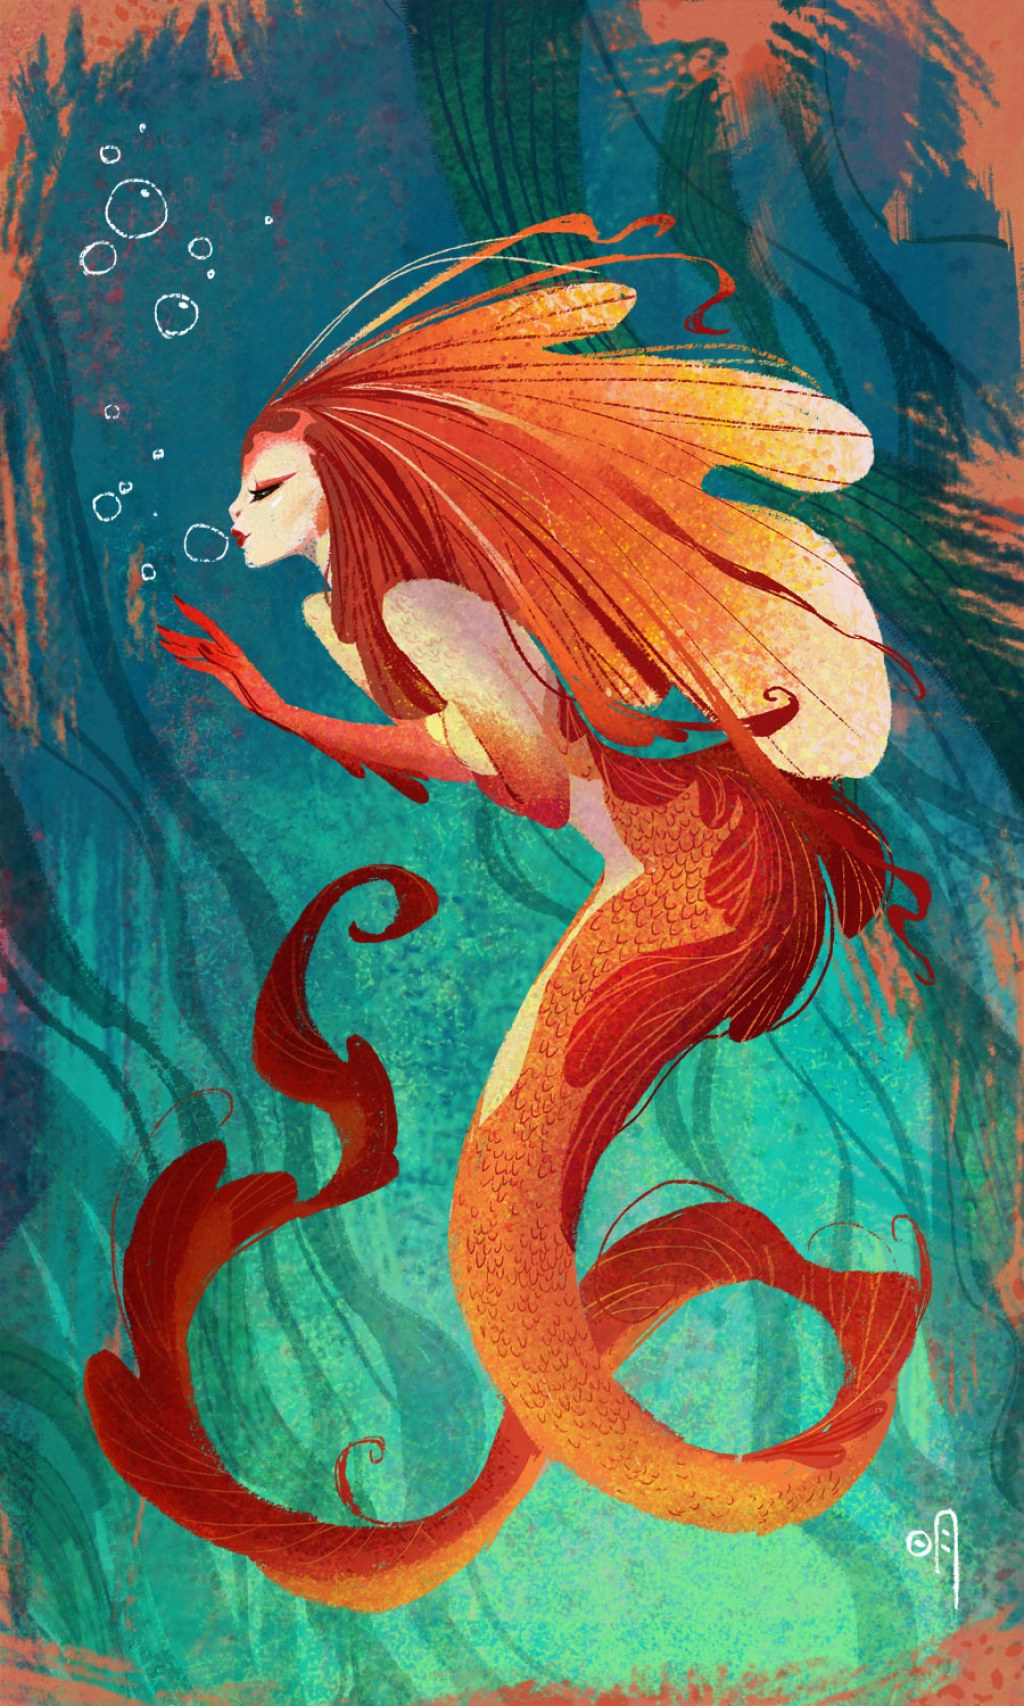 mermaid concept art - Mermaid Concept Art and Illustrations  Concept Art World